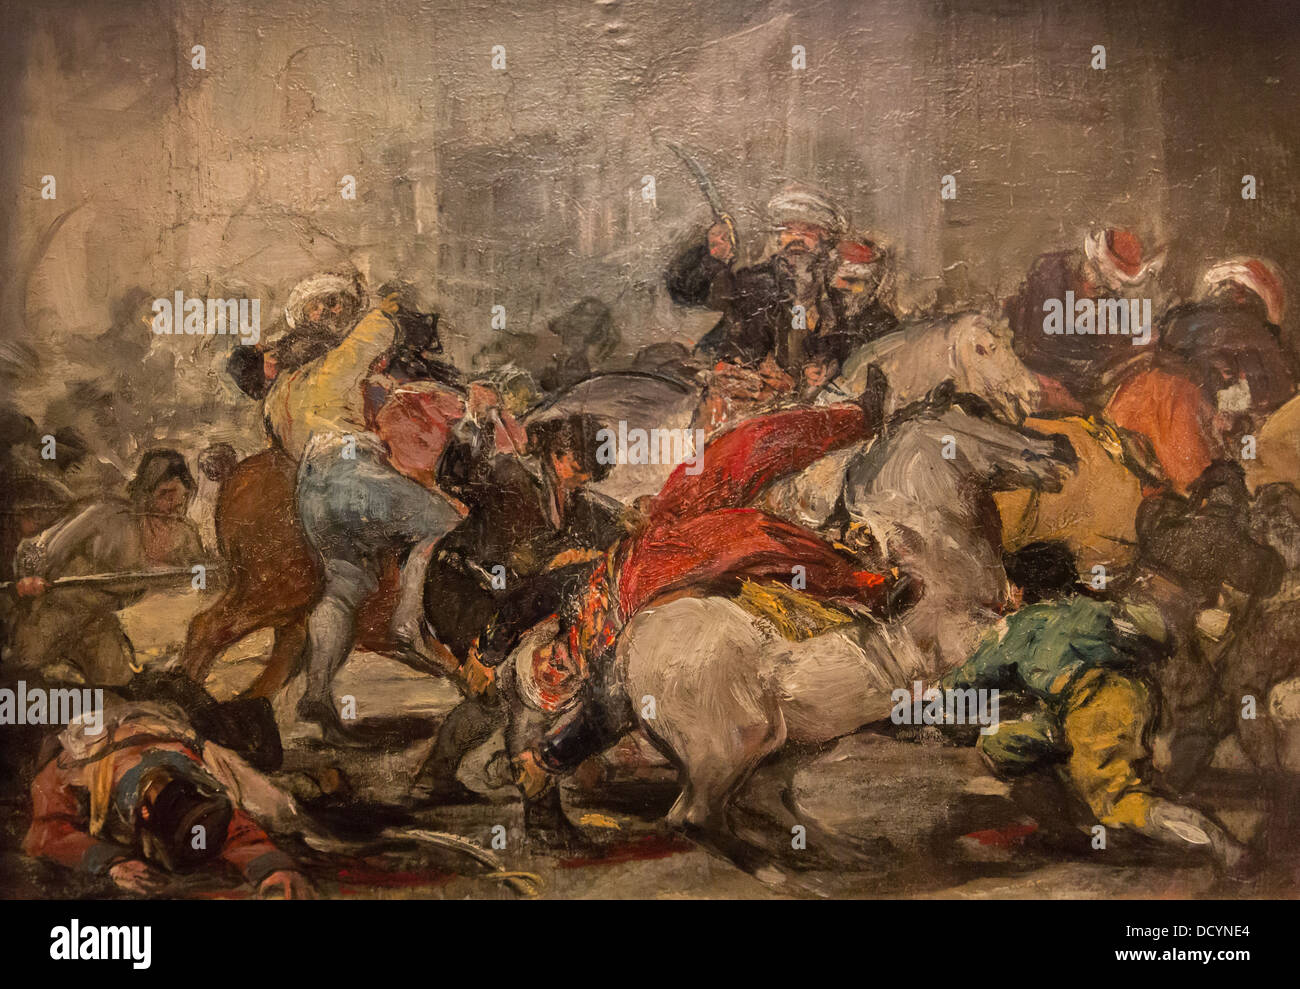 El siglo XIX - el ataque contra el Mamalouks en la Puerta del Sol - Francisco de Goya y Lucientes (1814) oleo sobre papel Foto de stock